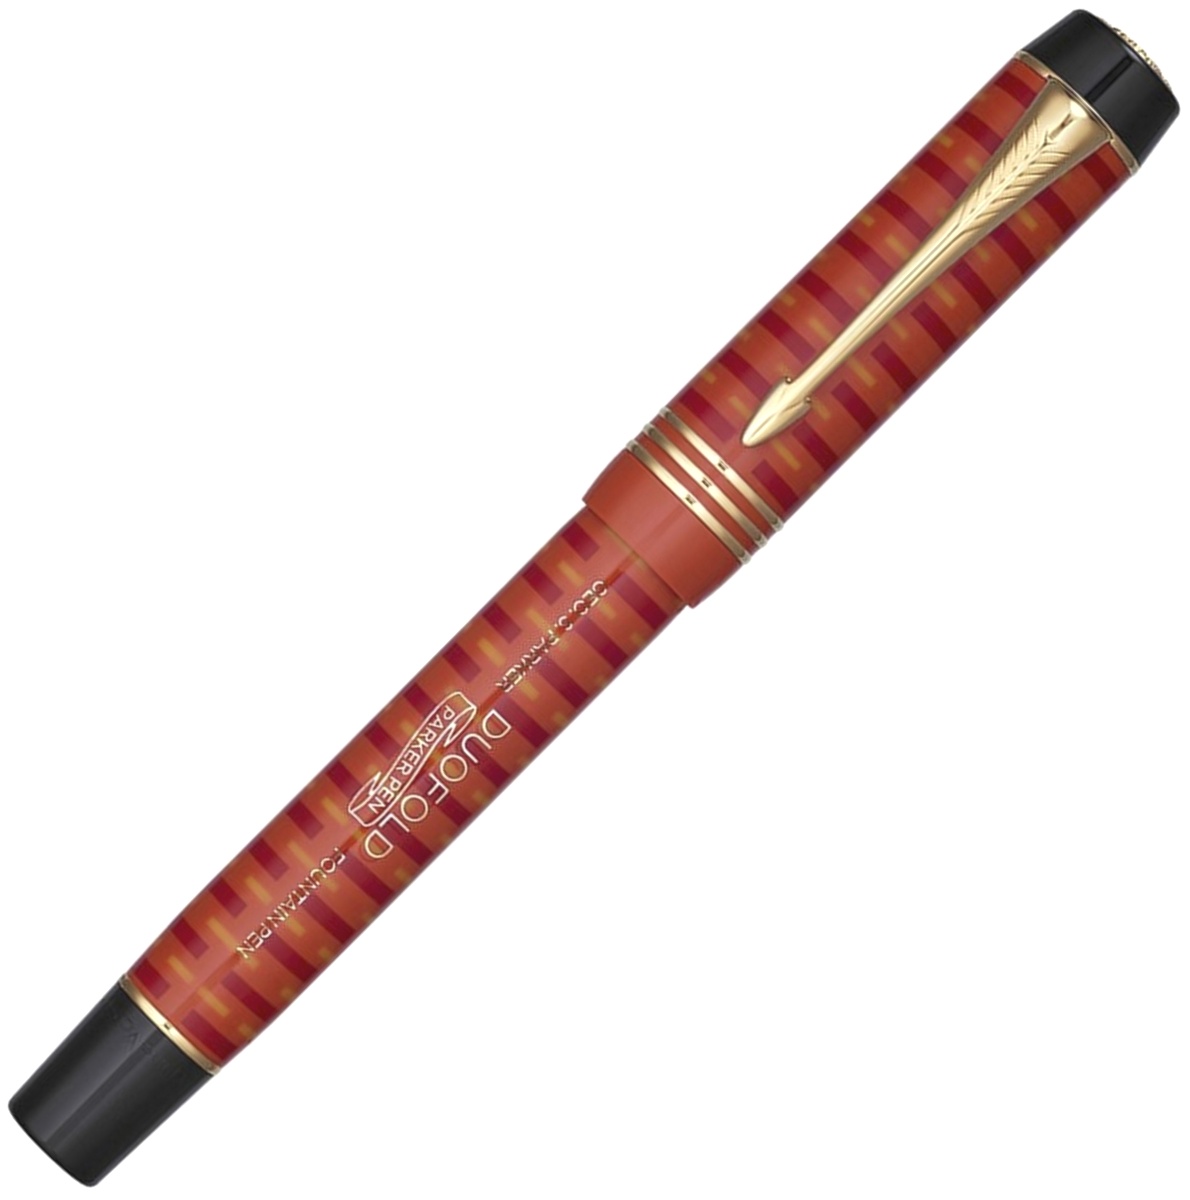  Перьевая ручка Parker Duofold 100th Anniversary LE, Big Red GT (Перо F), фото 2